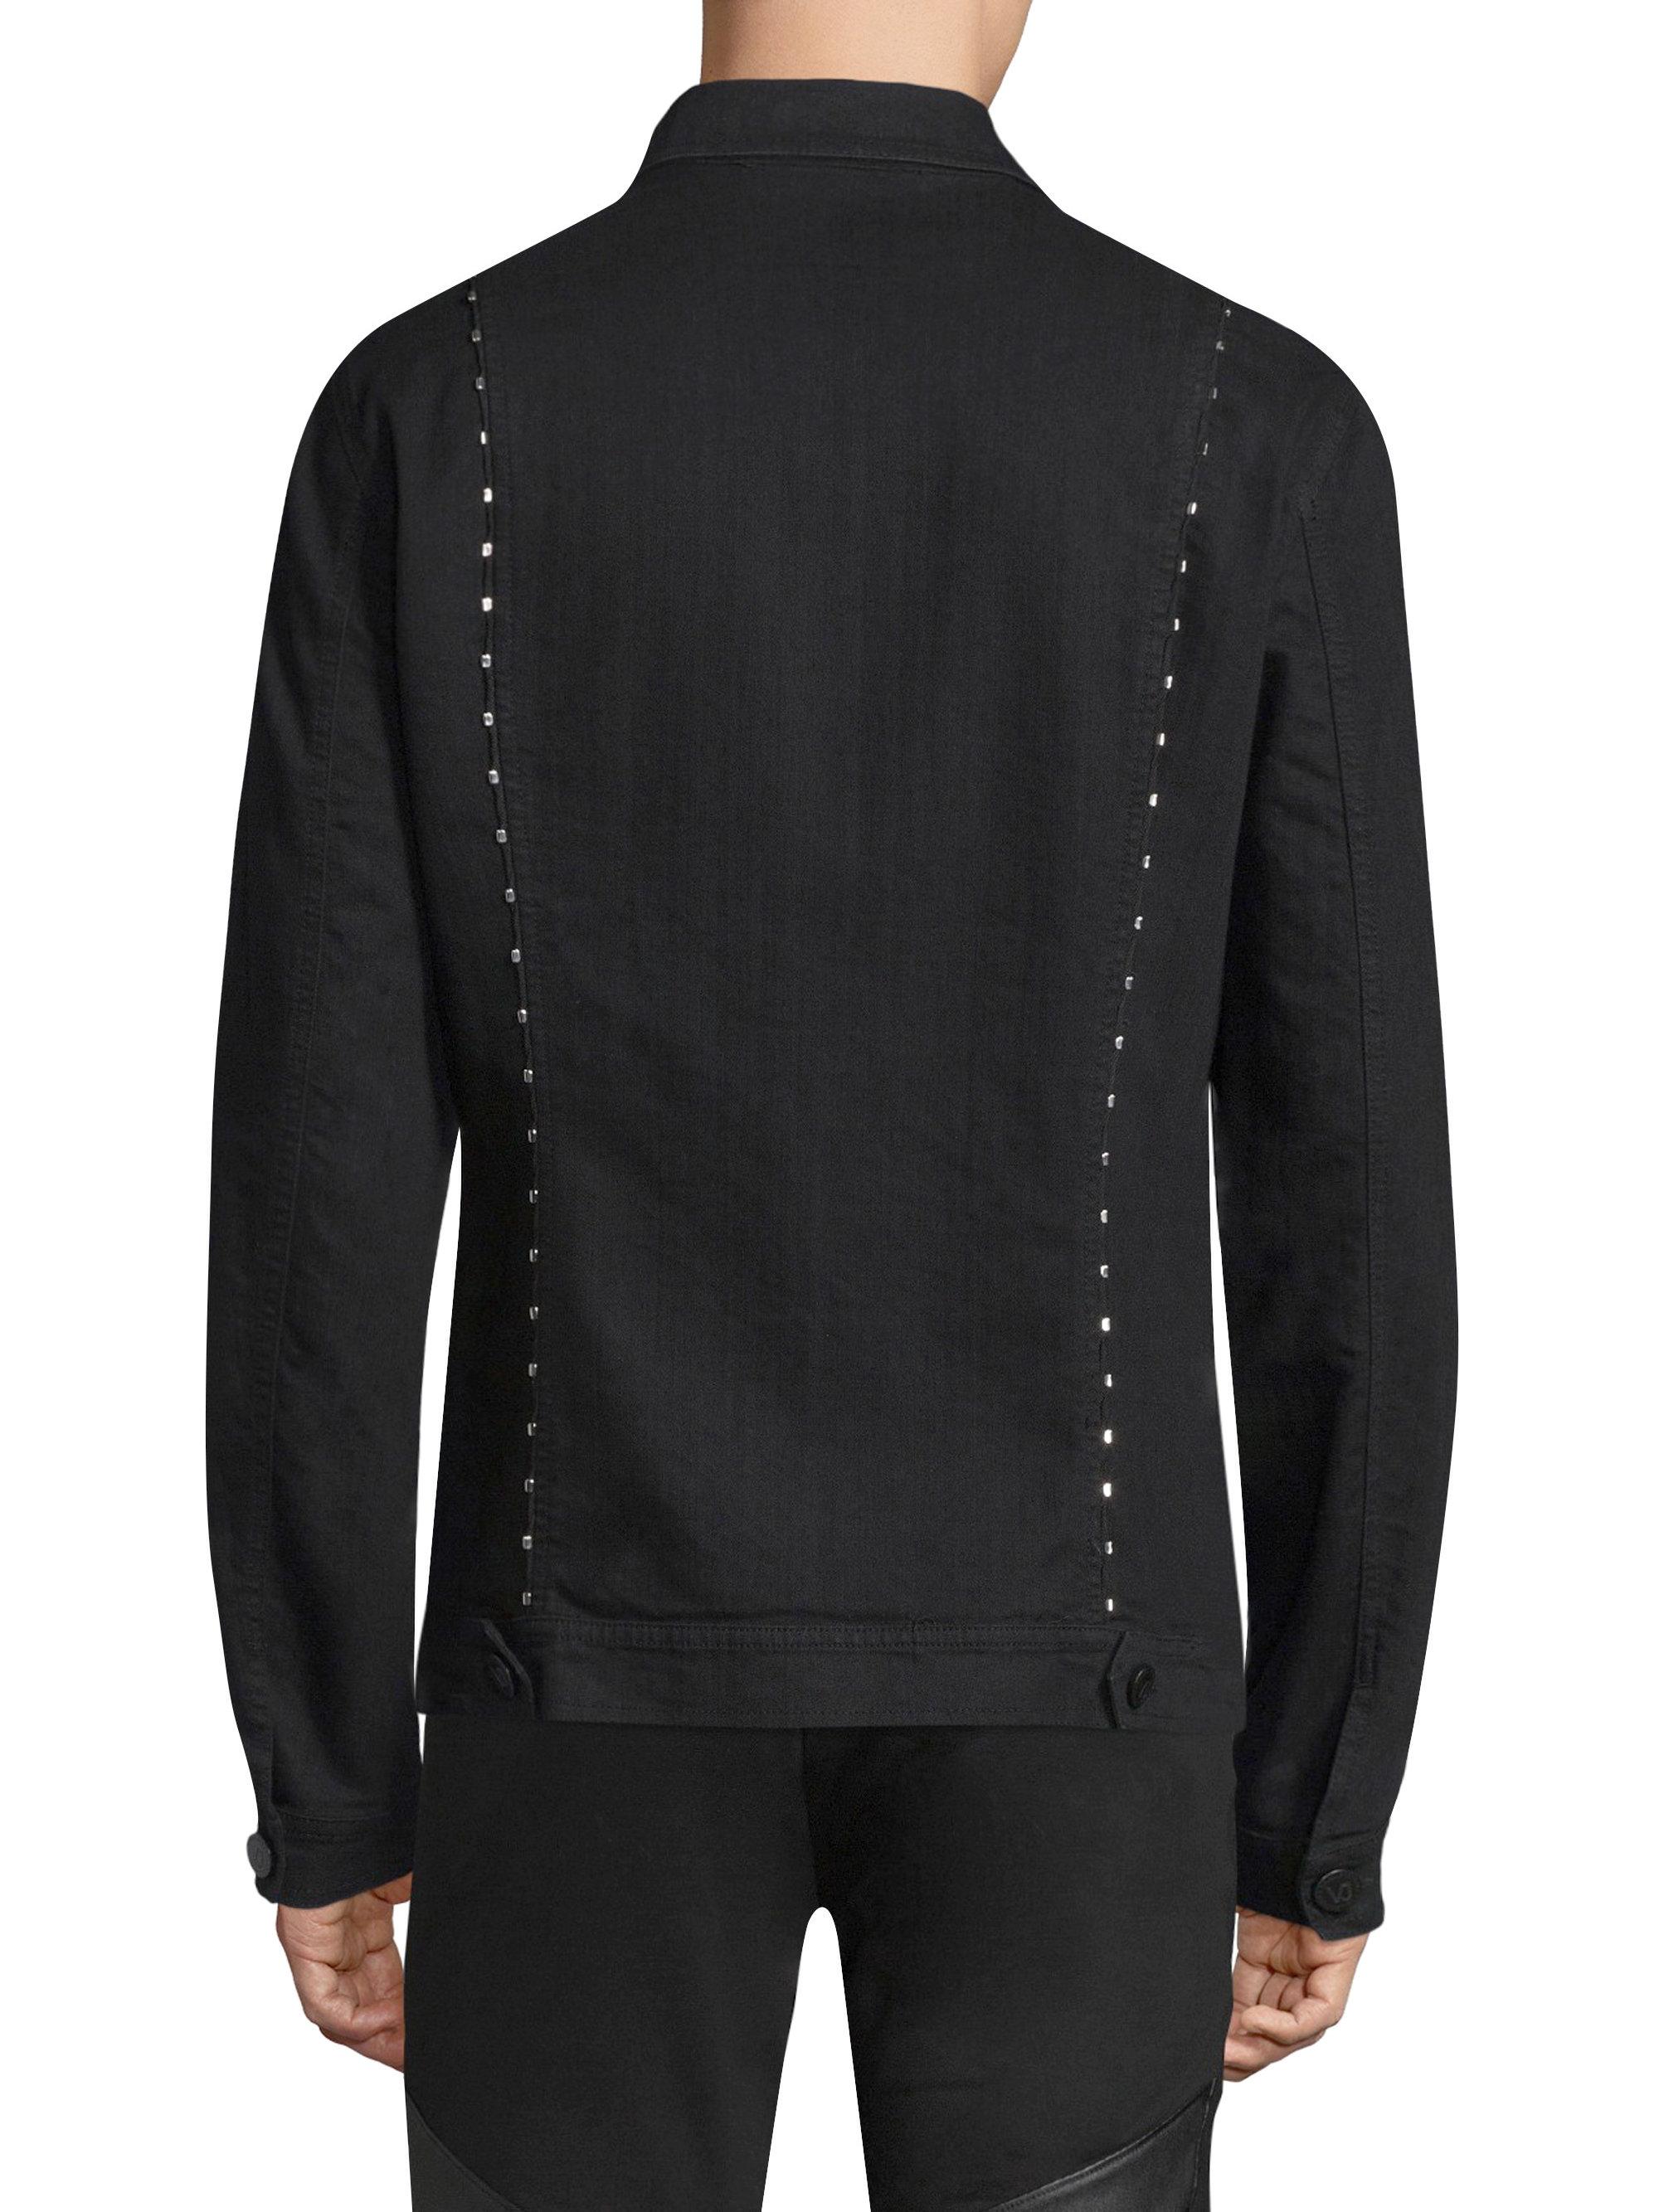 Versace Jeans Denim Jacket in Black for Men - Lyst